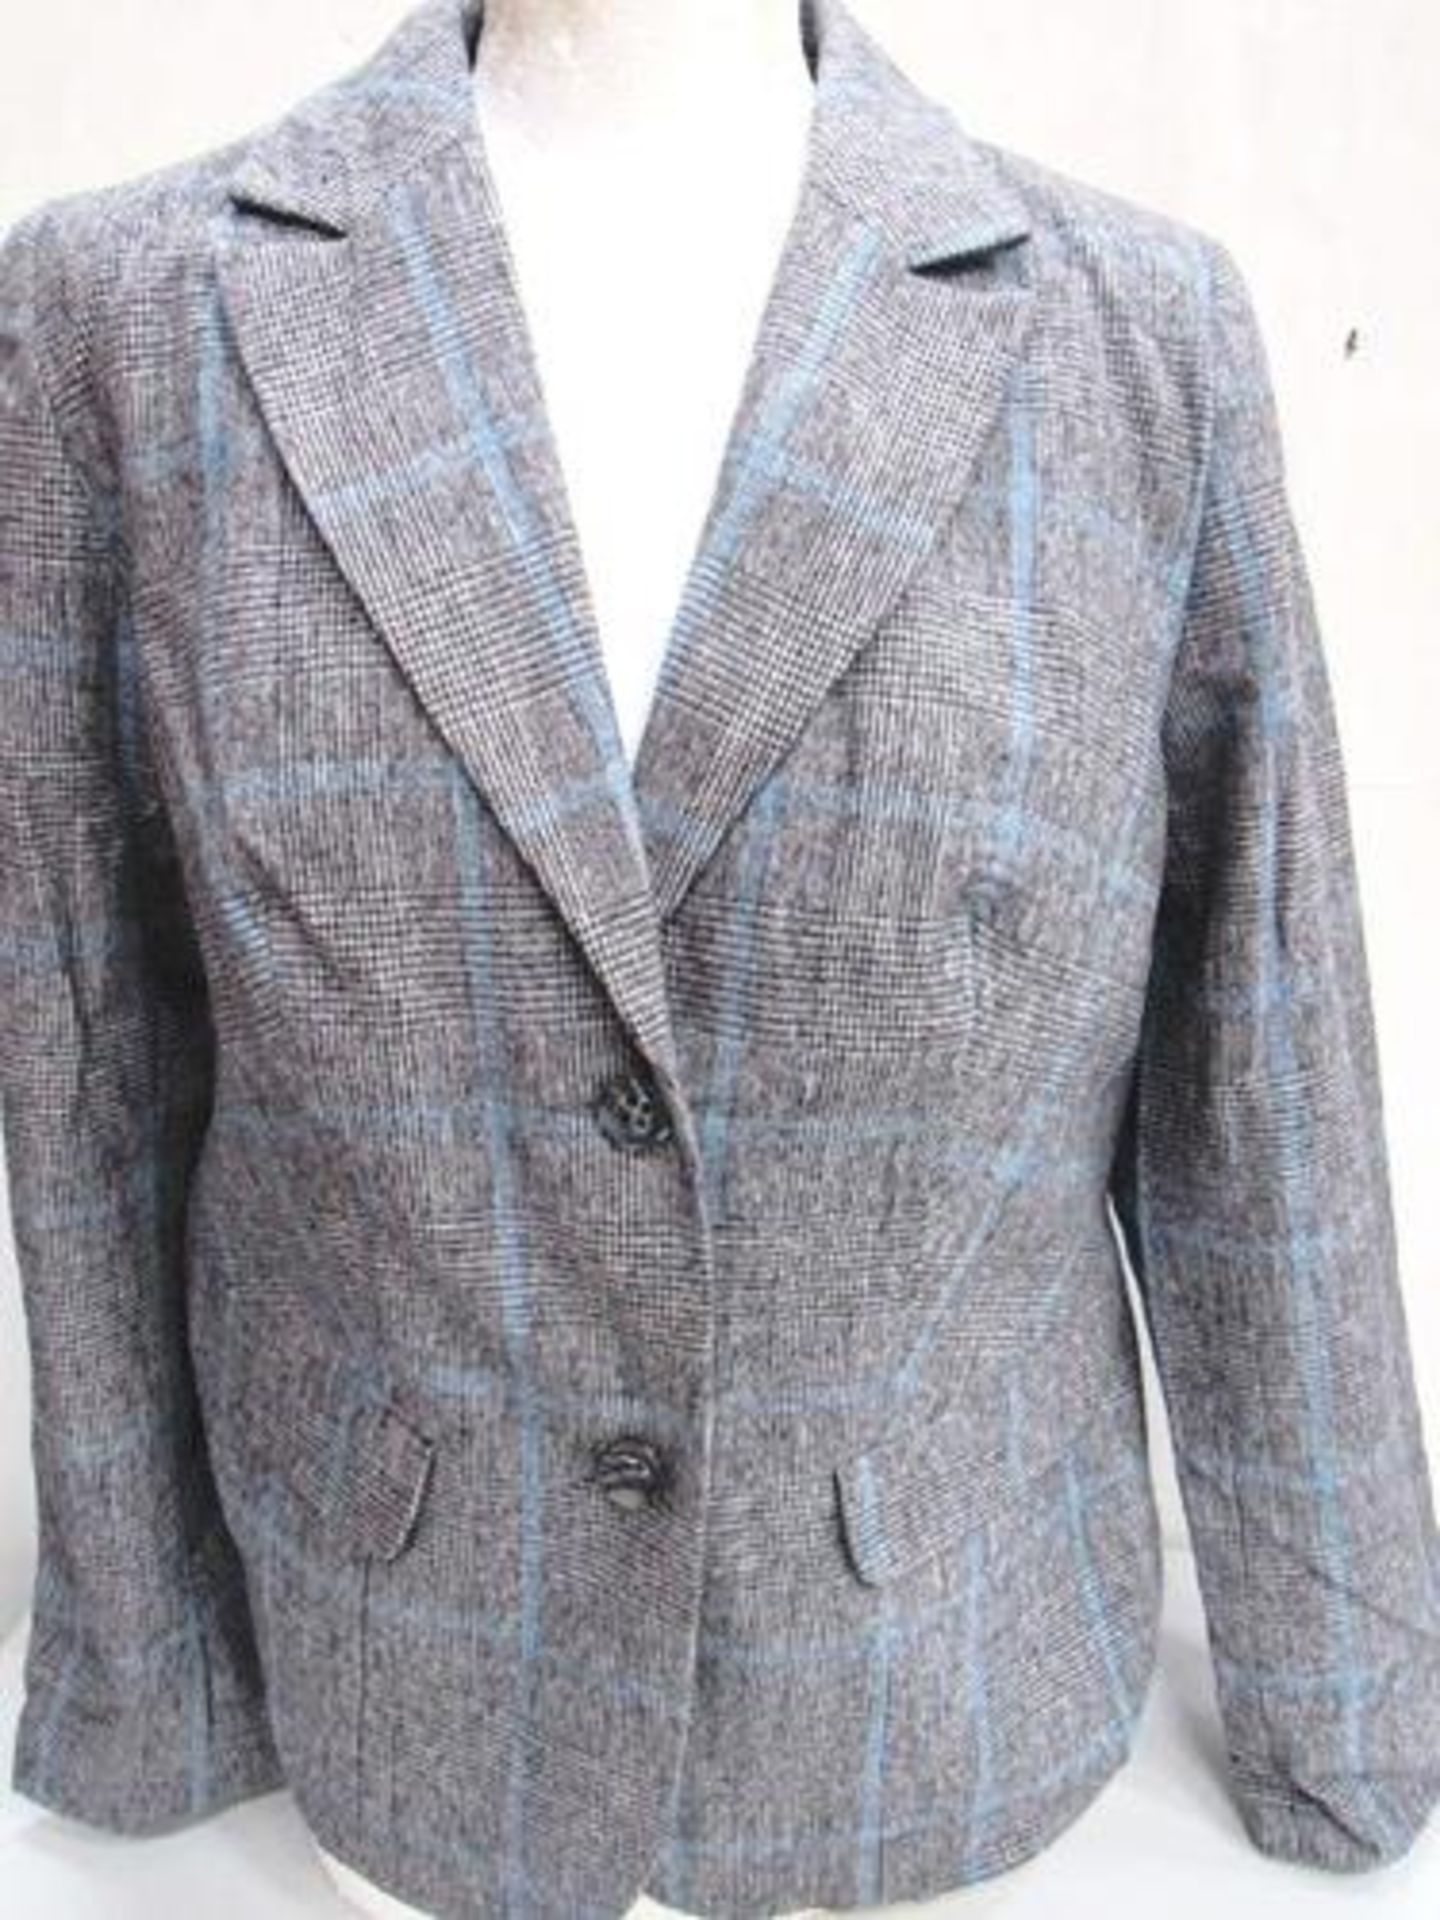 1 x Crewe ladies Penrhyn wool blazer, size 14, RRP £139.00 - Sealed new in box (1B)